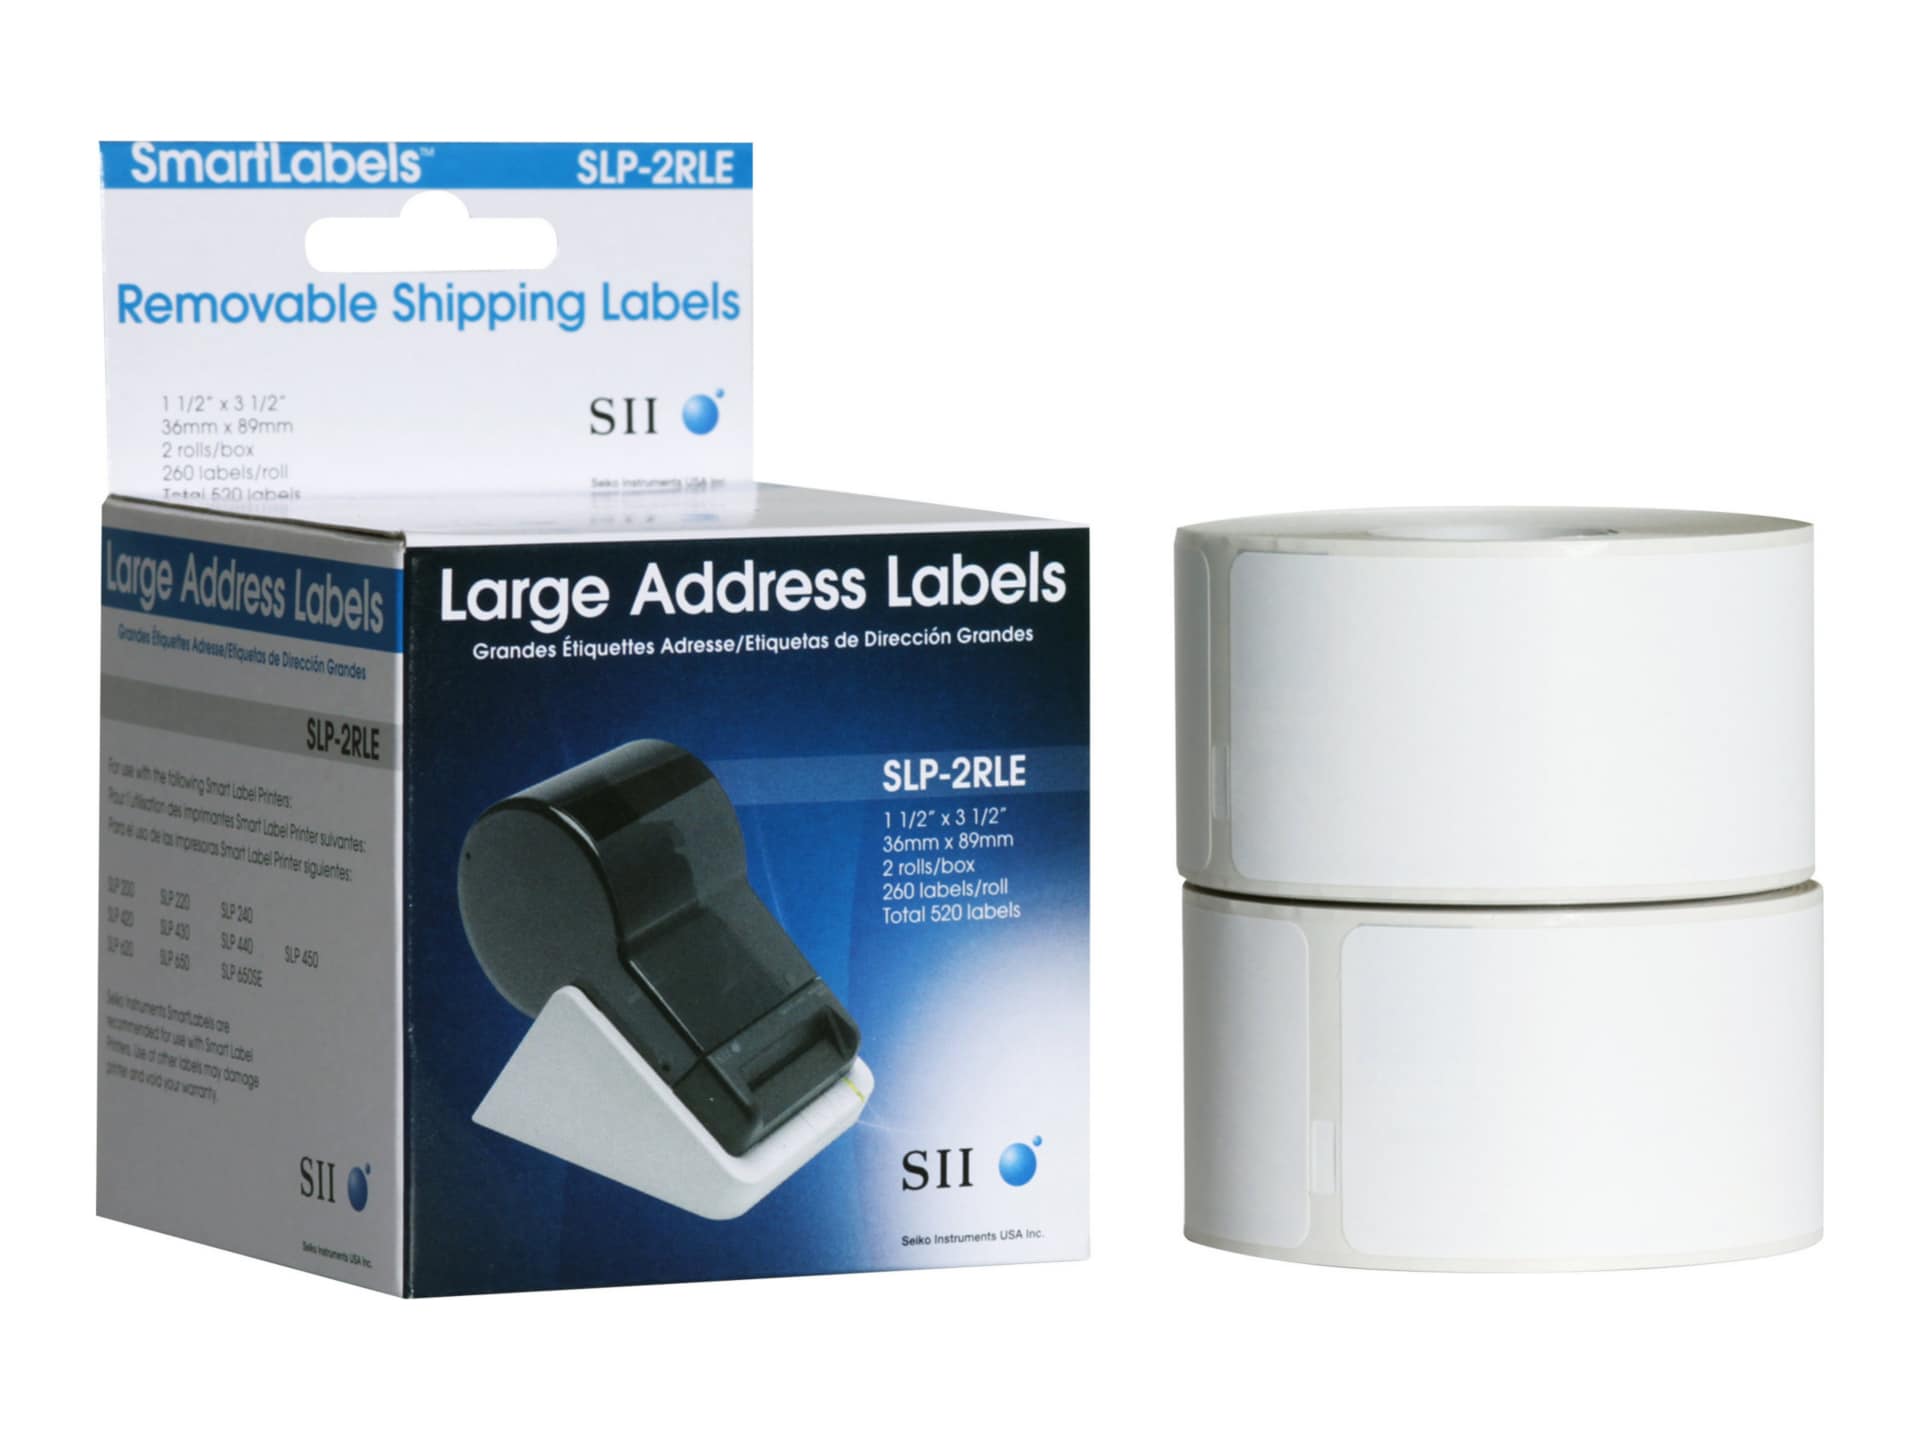 Seiko SmartLabels for Smart Label Printers, Large White Address